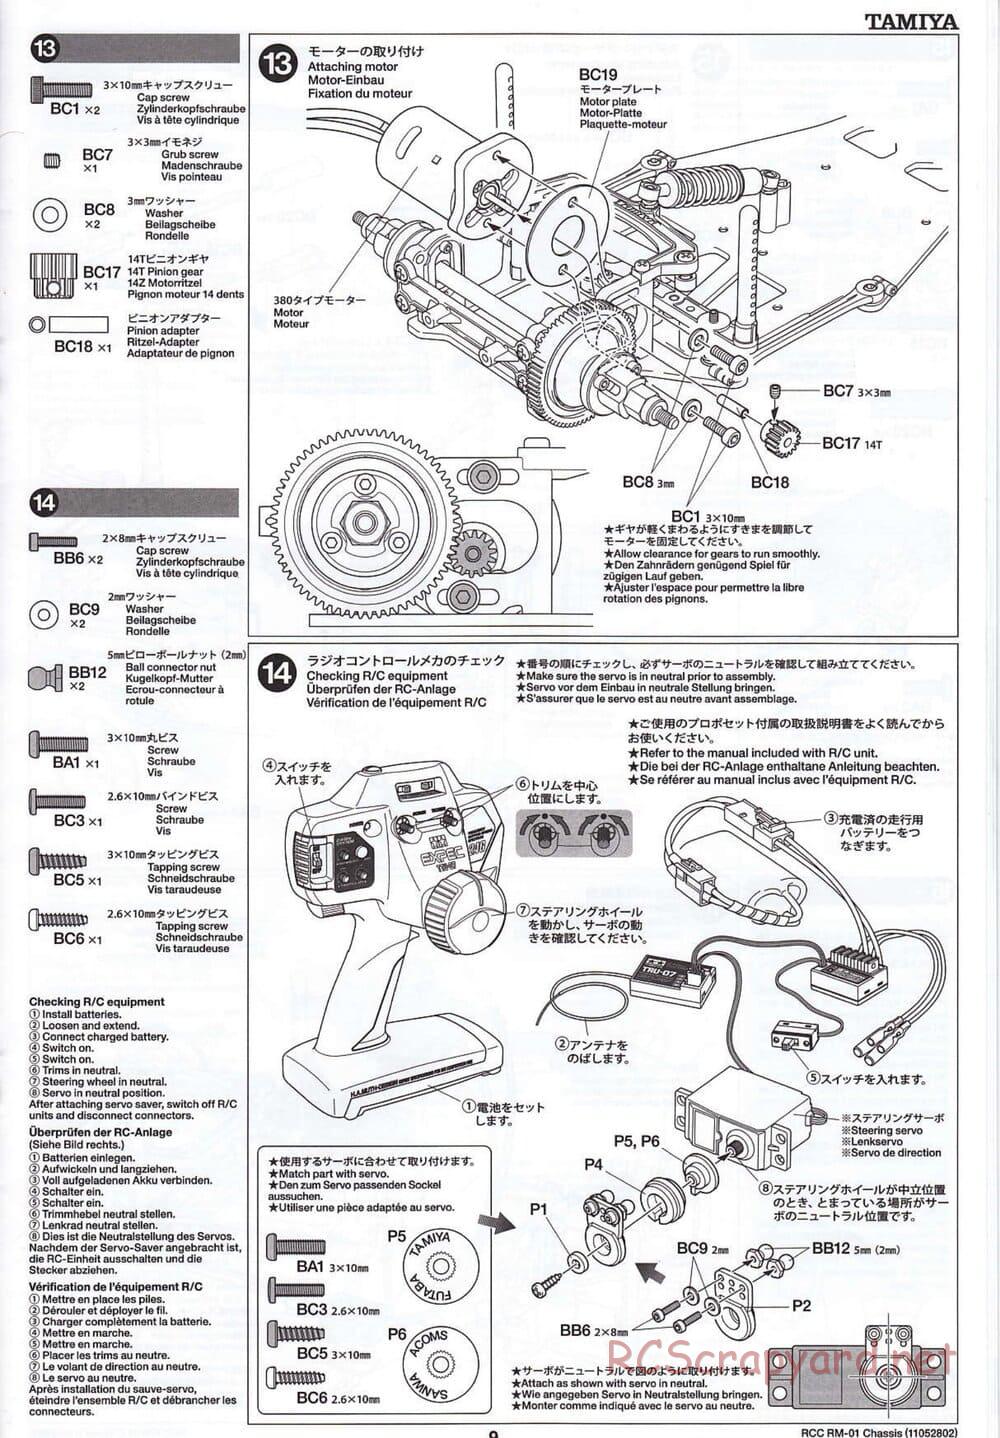 Tamiya - RM-01 Chassis - Manual - Page 9